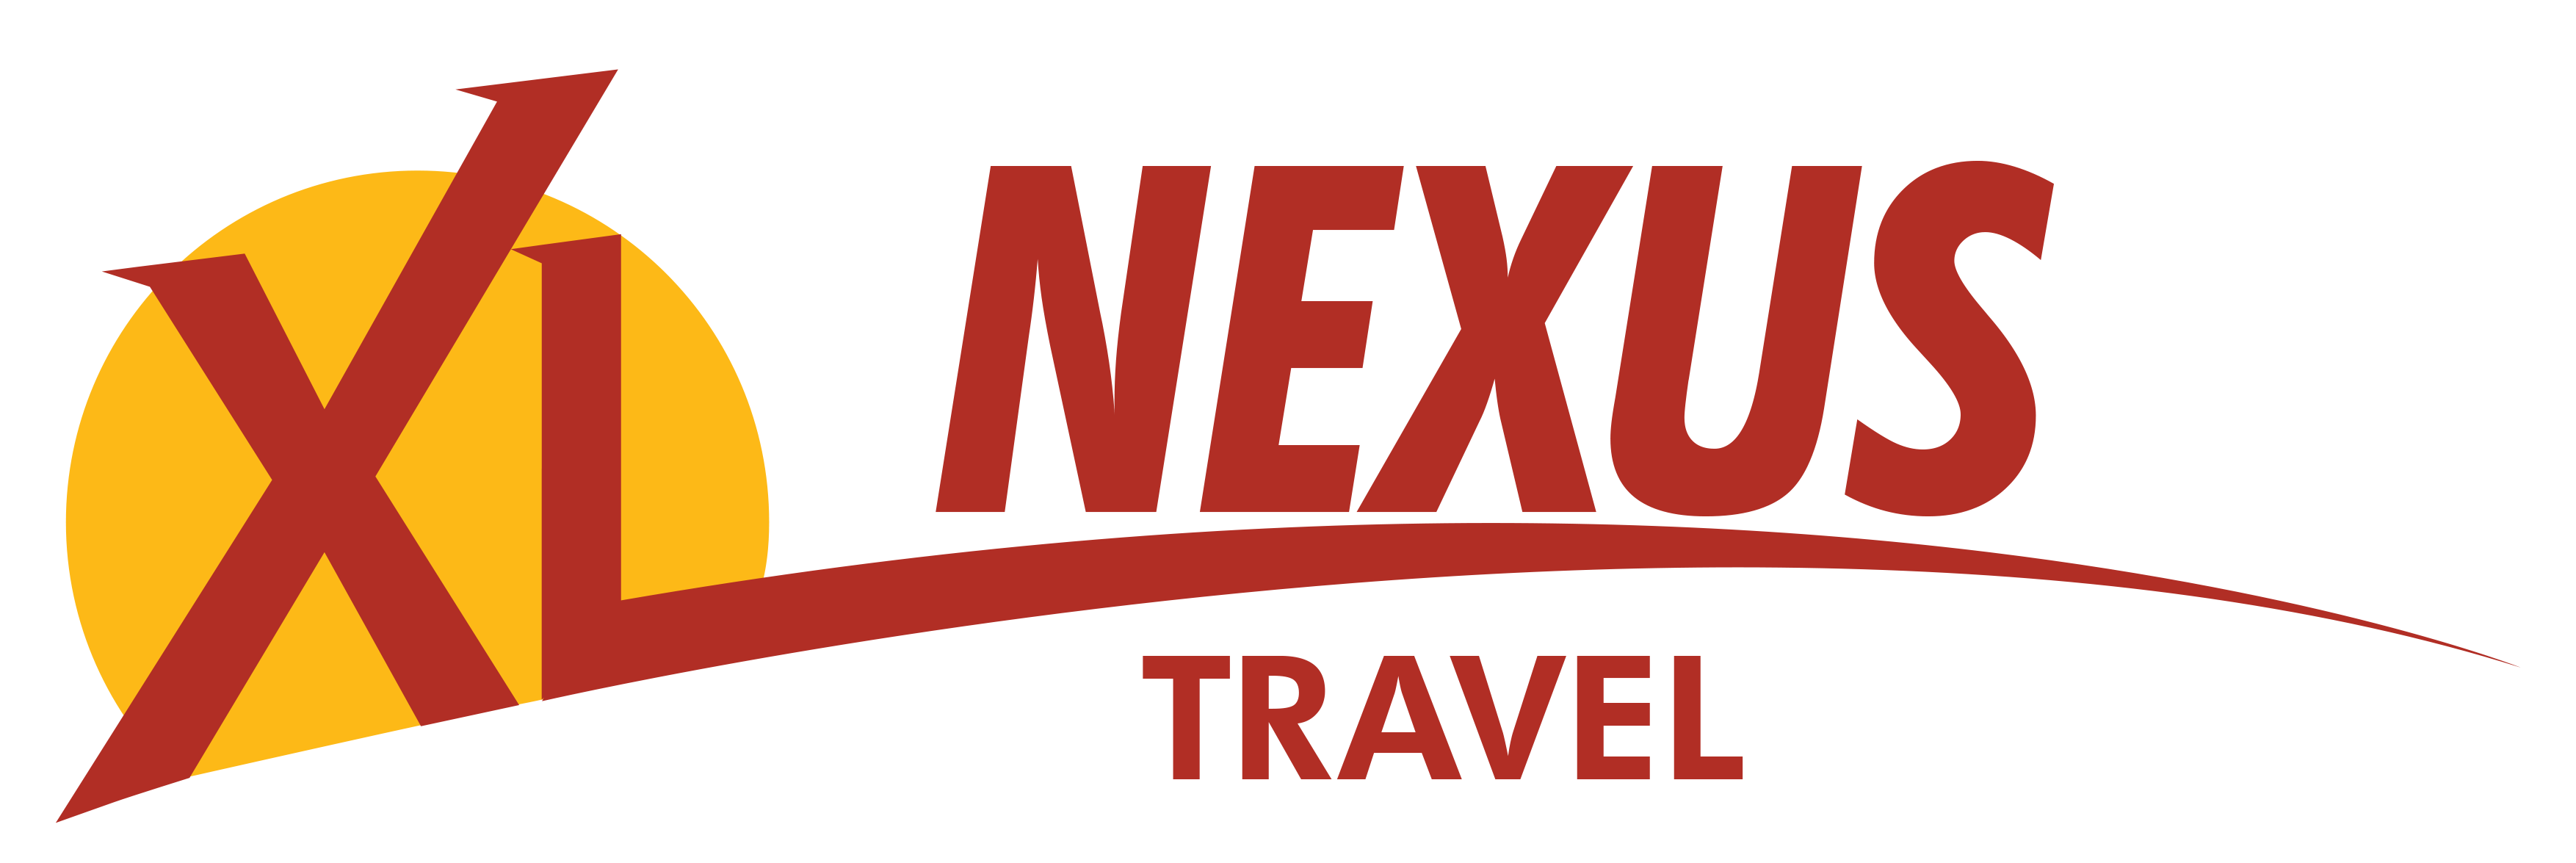 nexus travel app